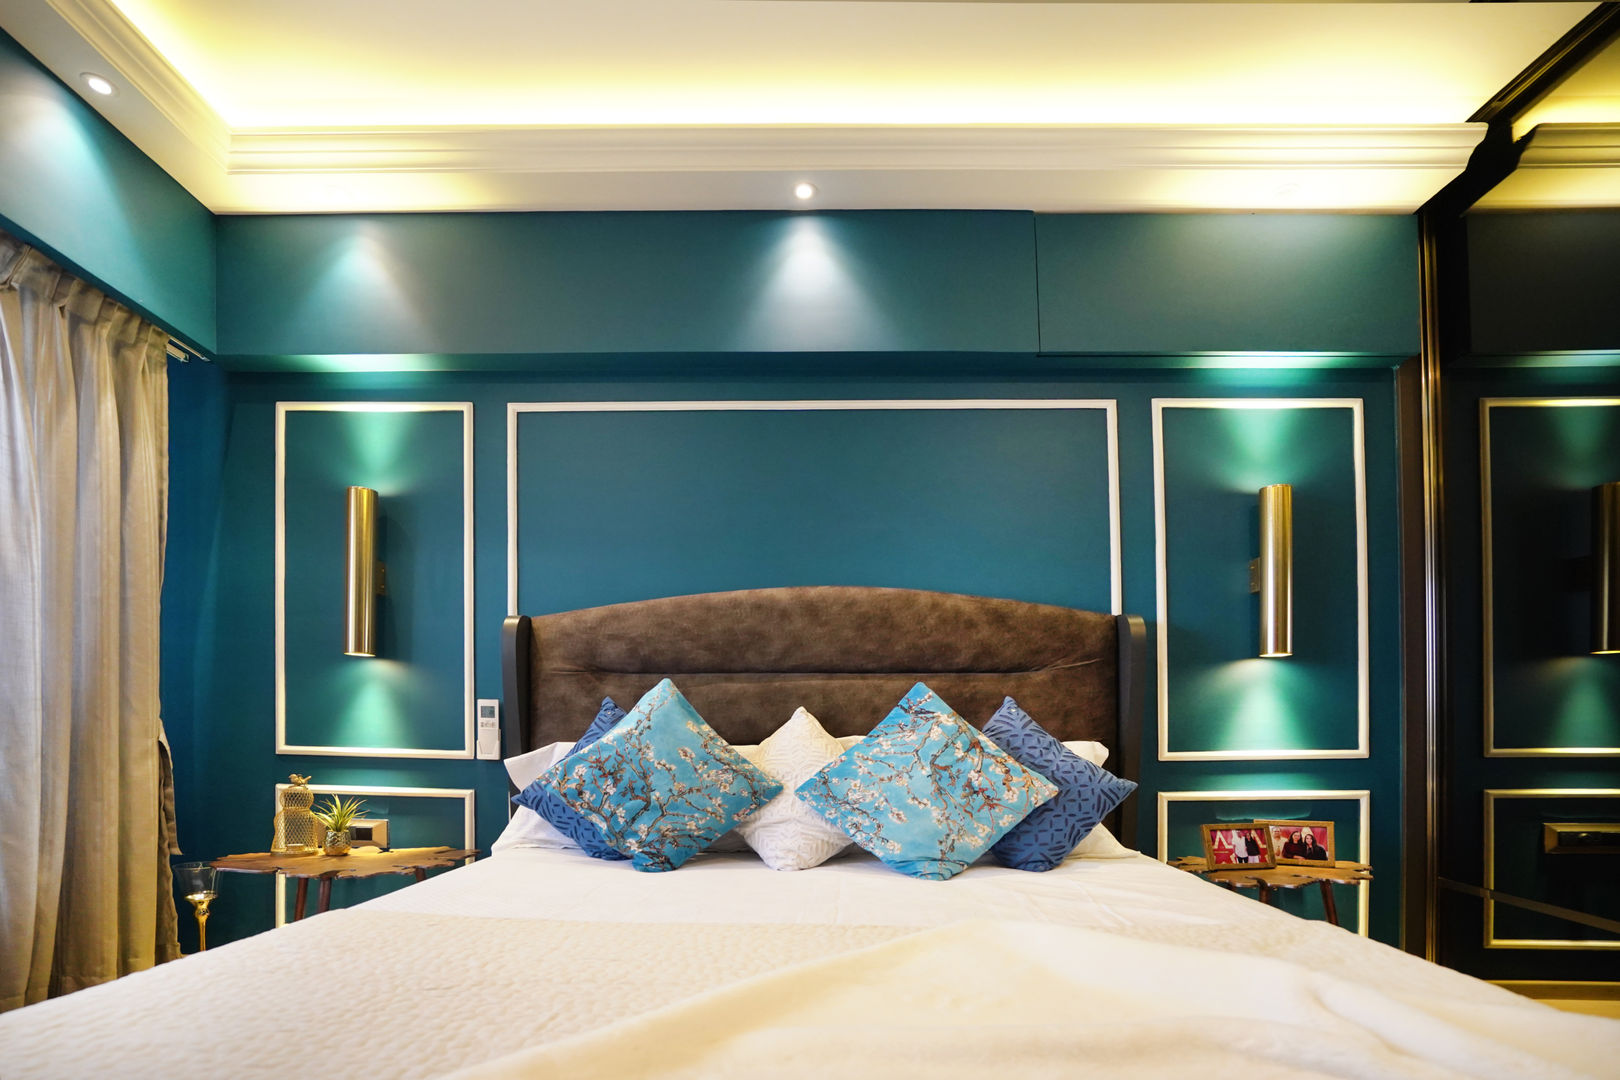 A cozy bedroom in blue HomeLane.com Small bedroom